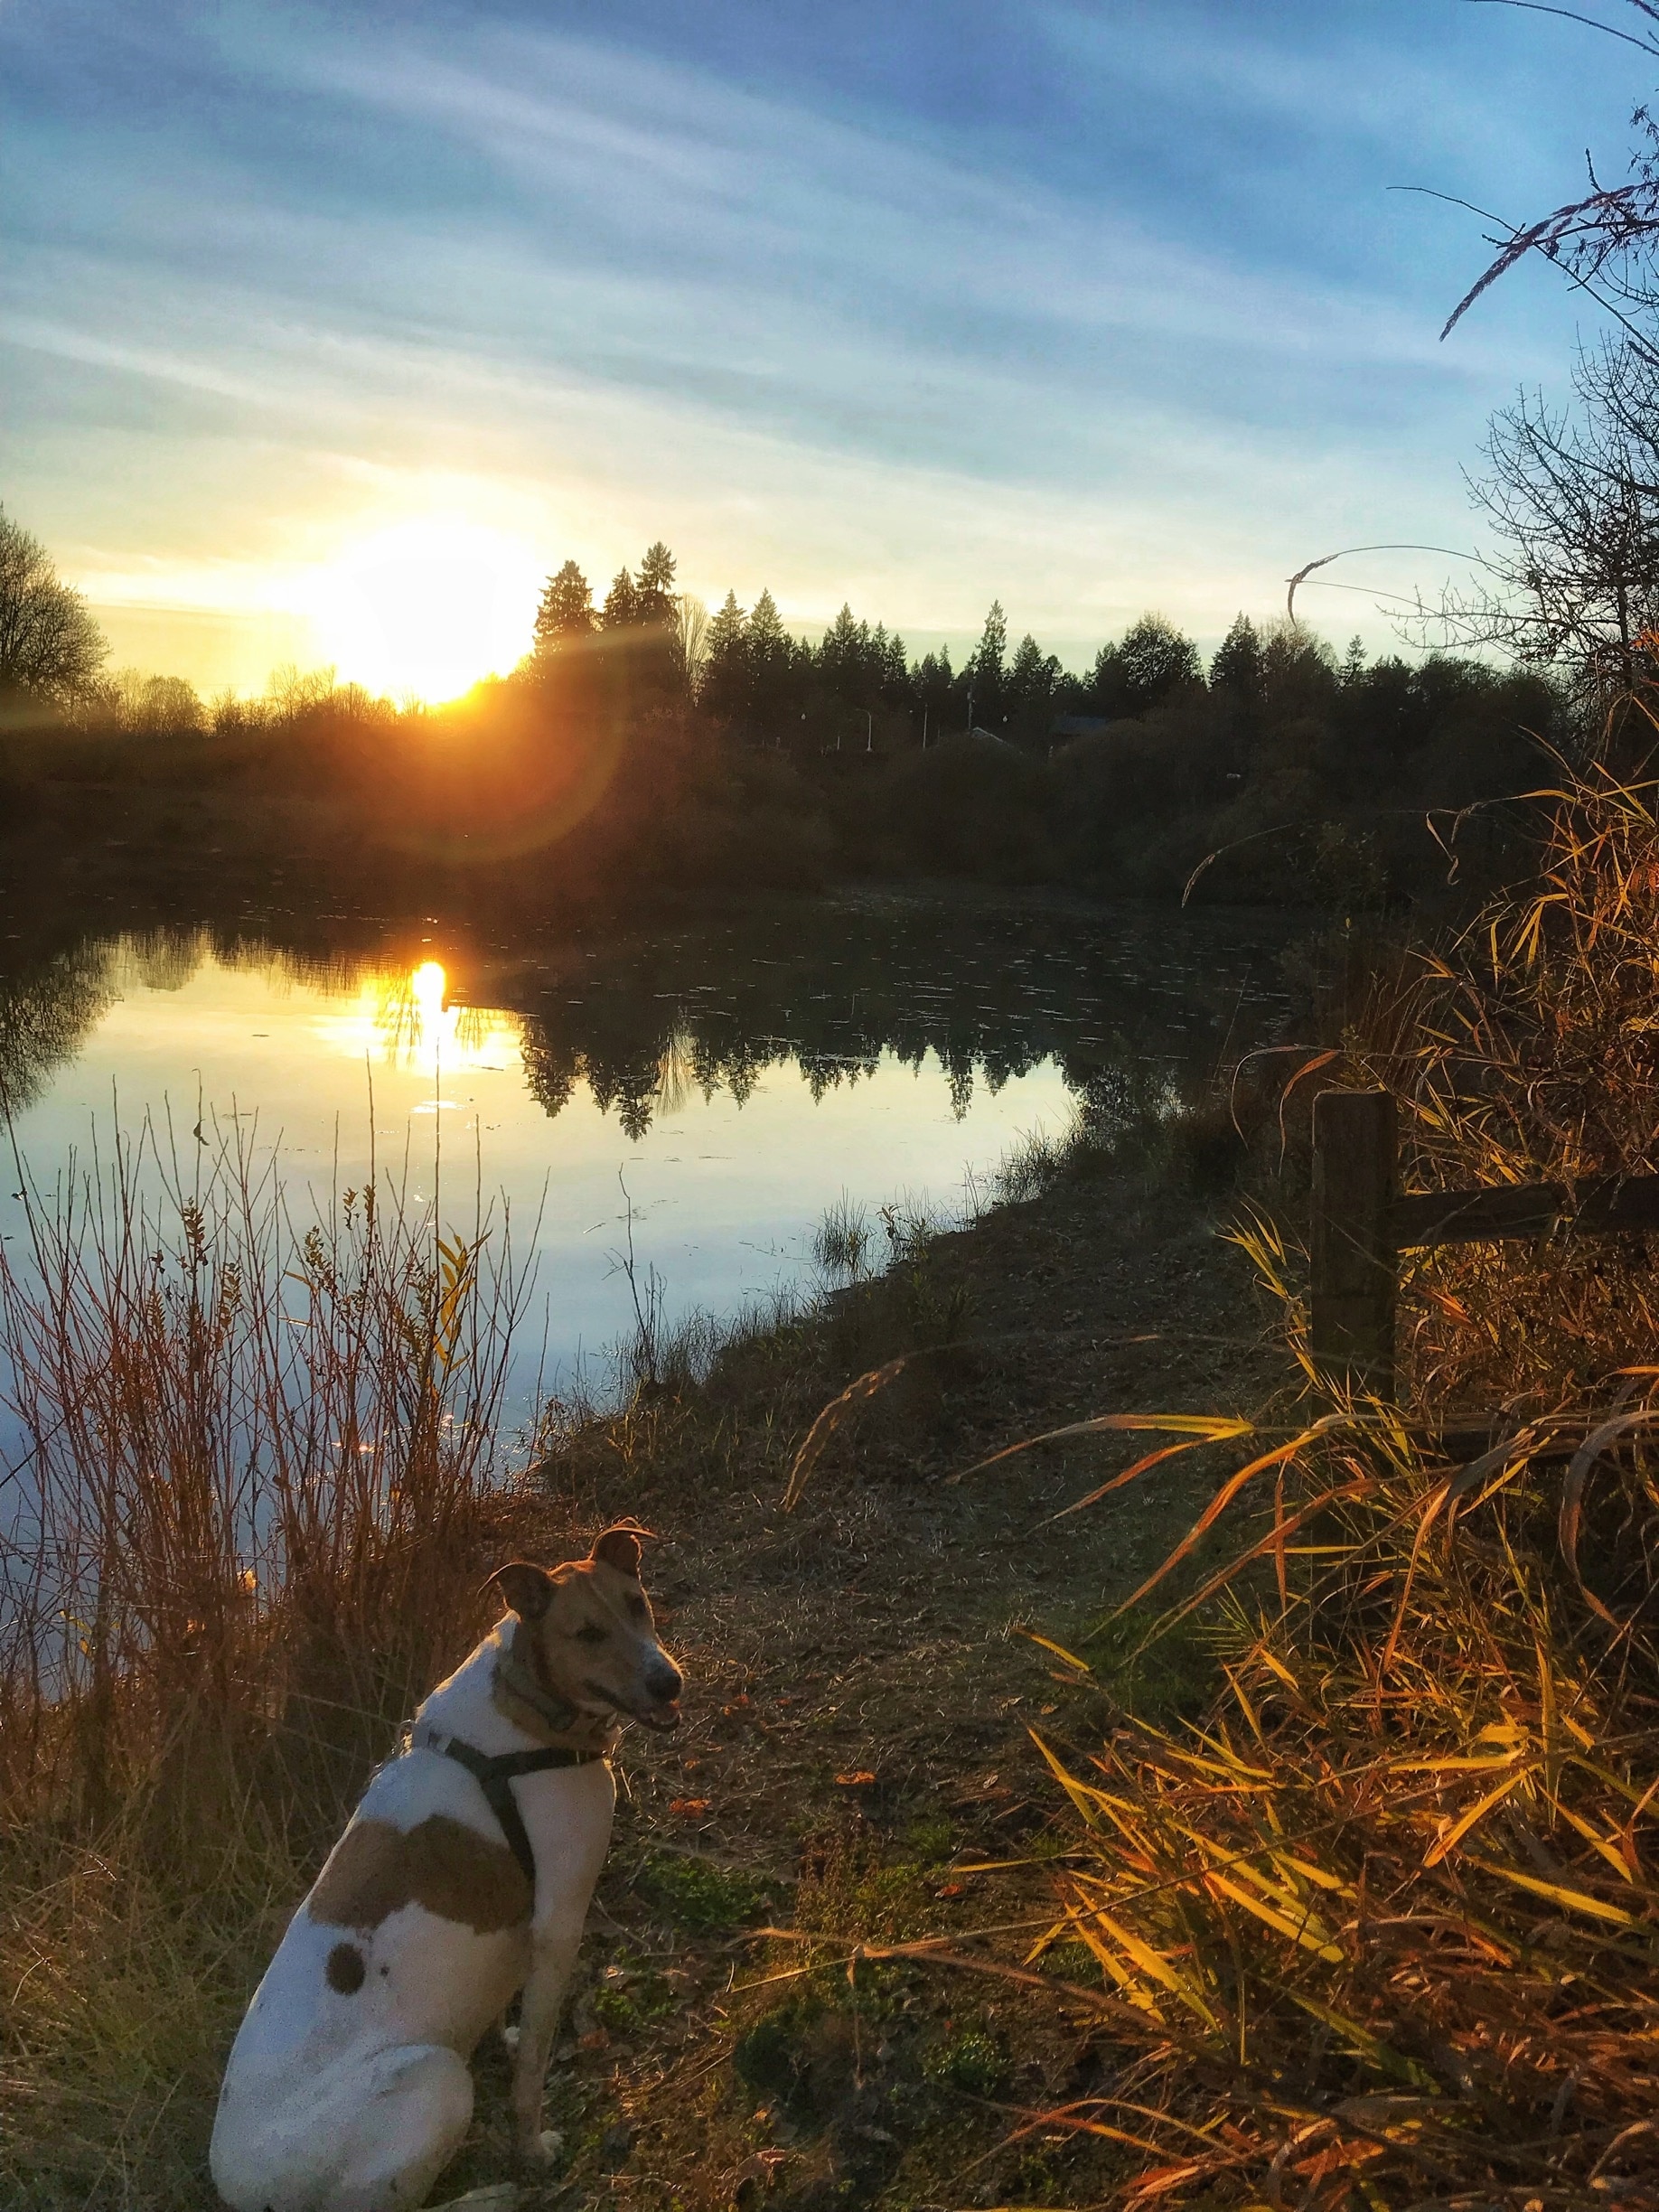 Perfect fall evening. #Sunset #bluesky #autumn #water #refection #sunlight  #dog